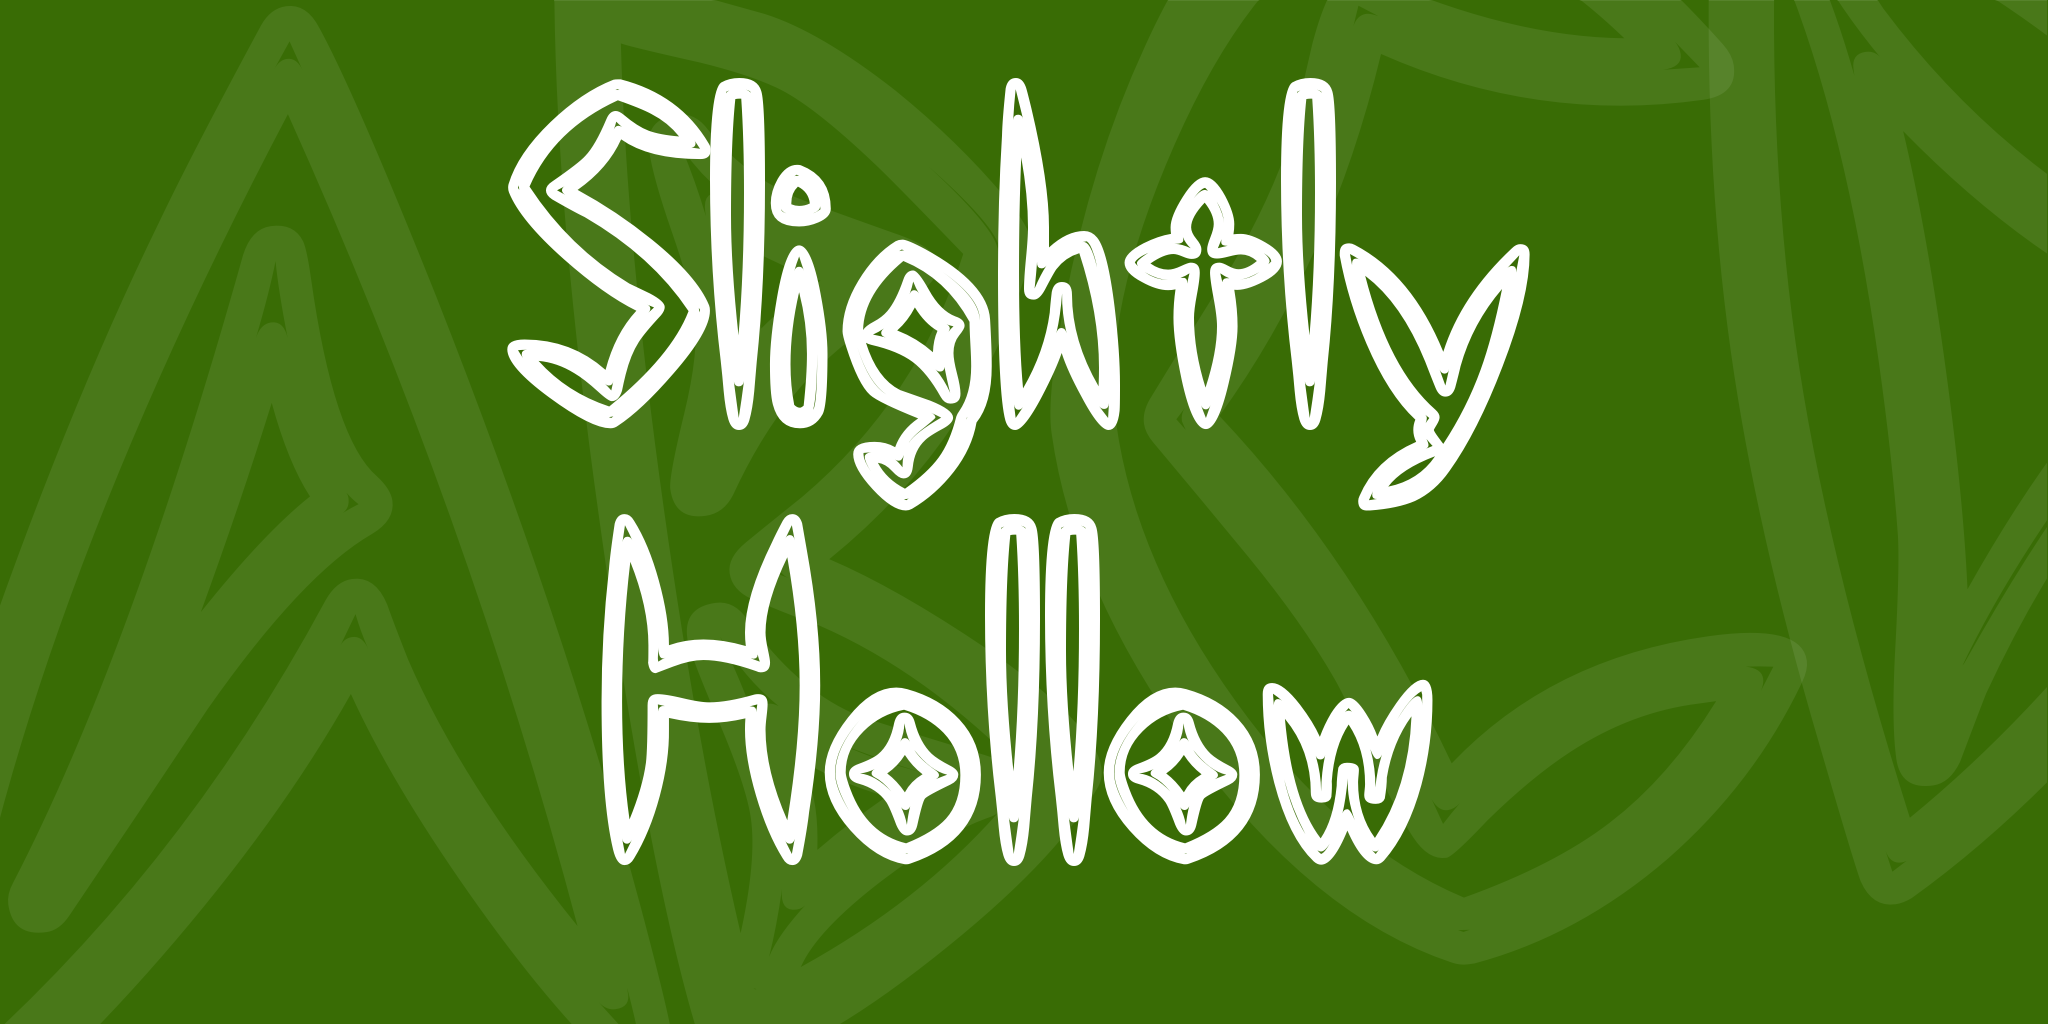 Slightly Hollow